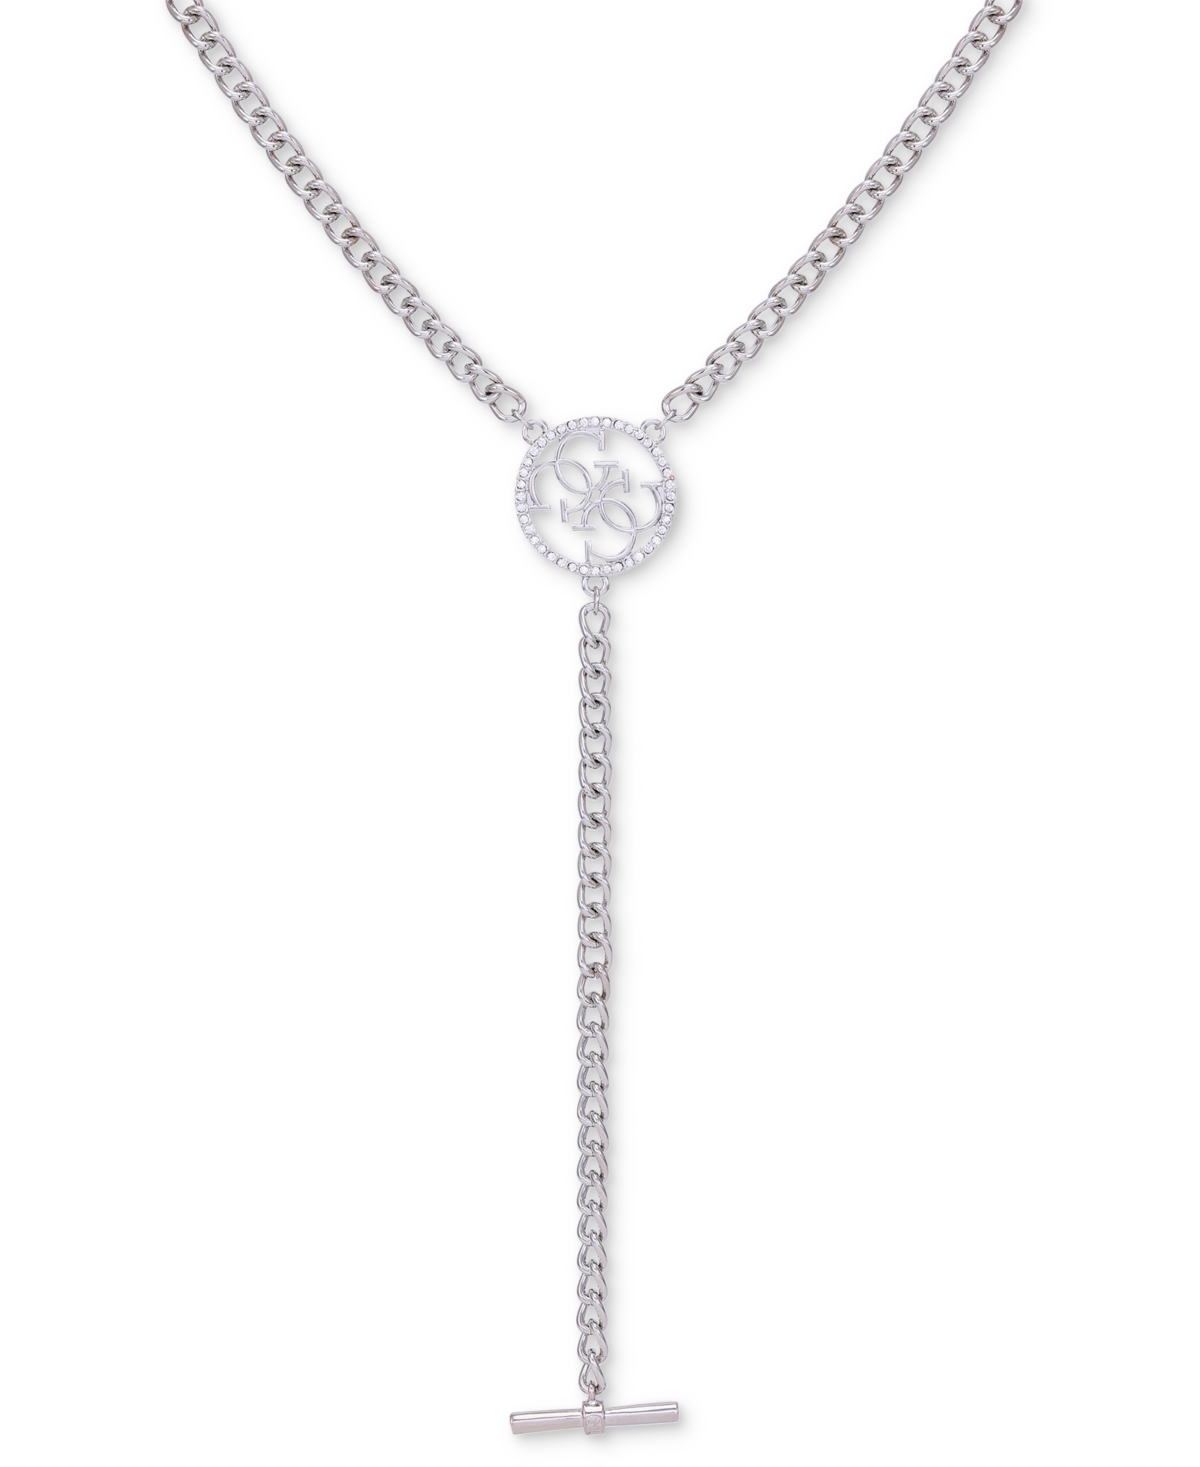 Silver-Tone Pave Quatro G Logo Lariat Necklace, 20" + 2" extender - Silver